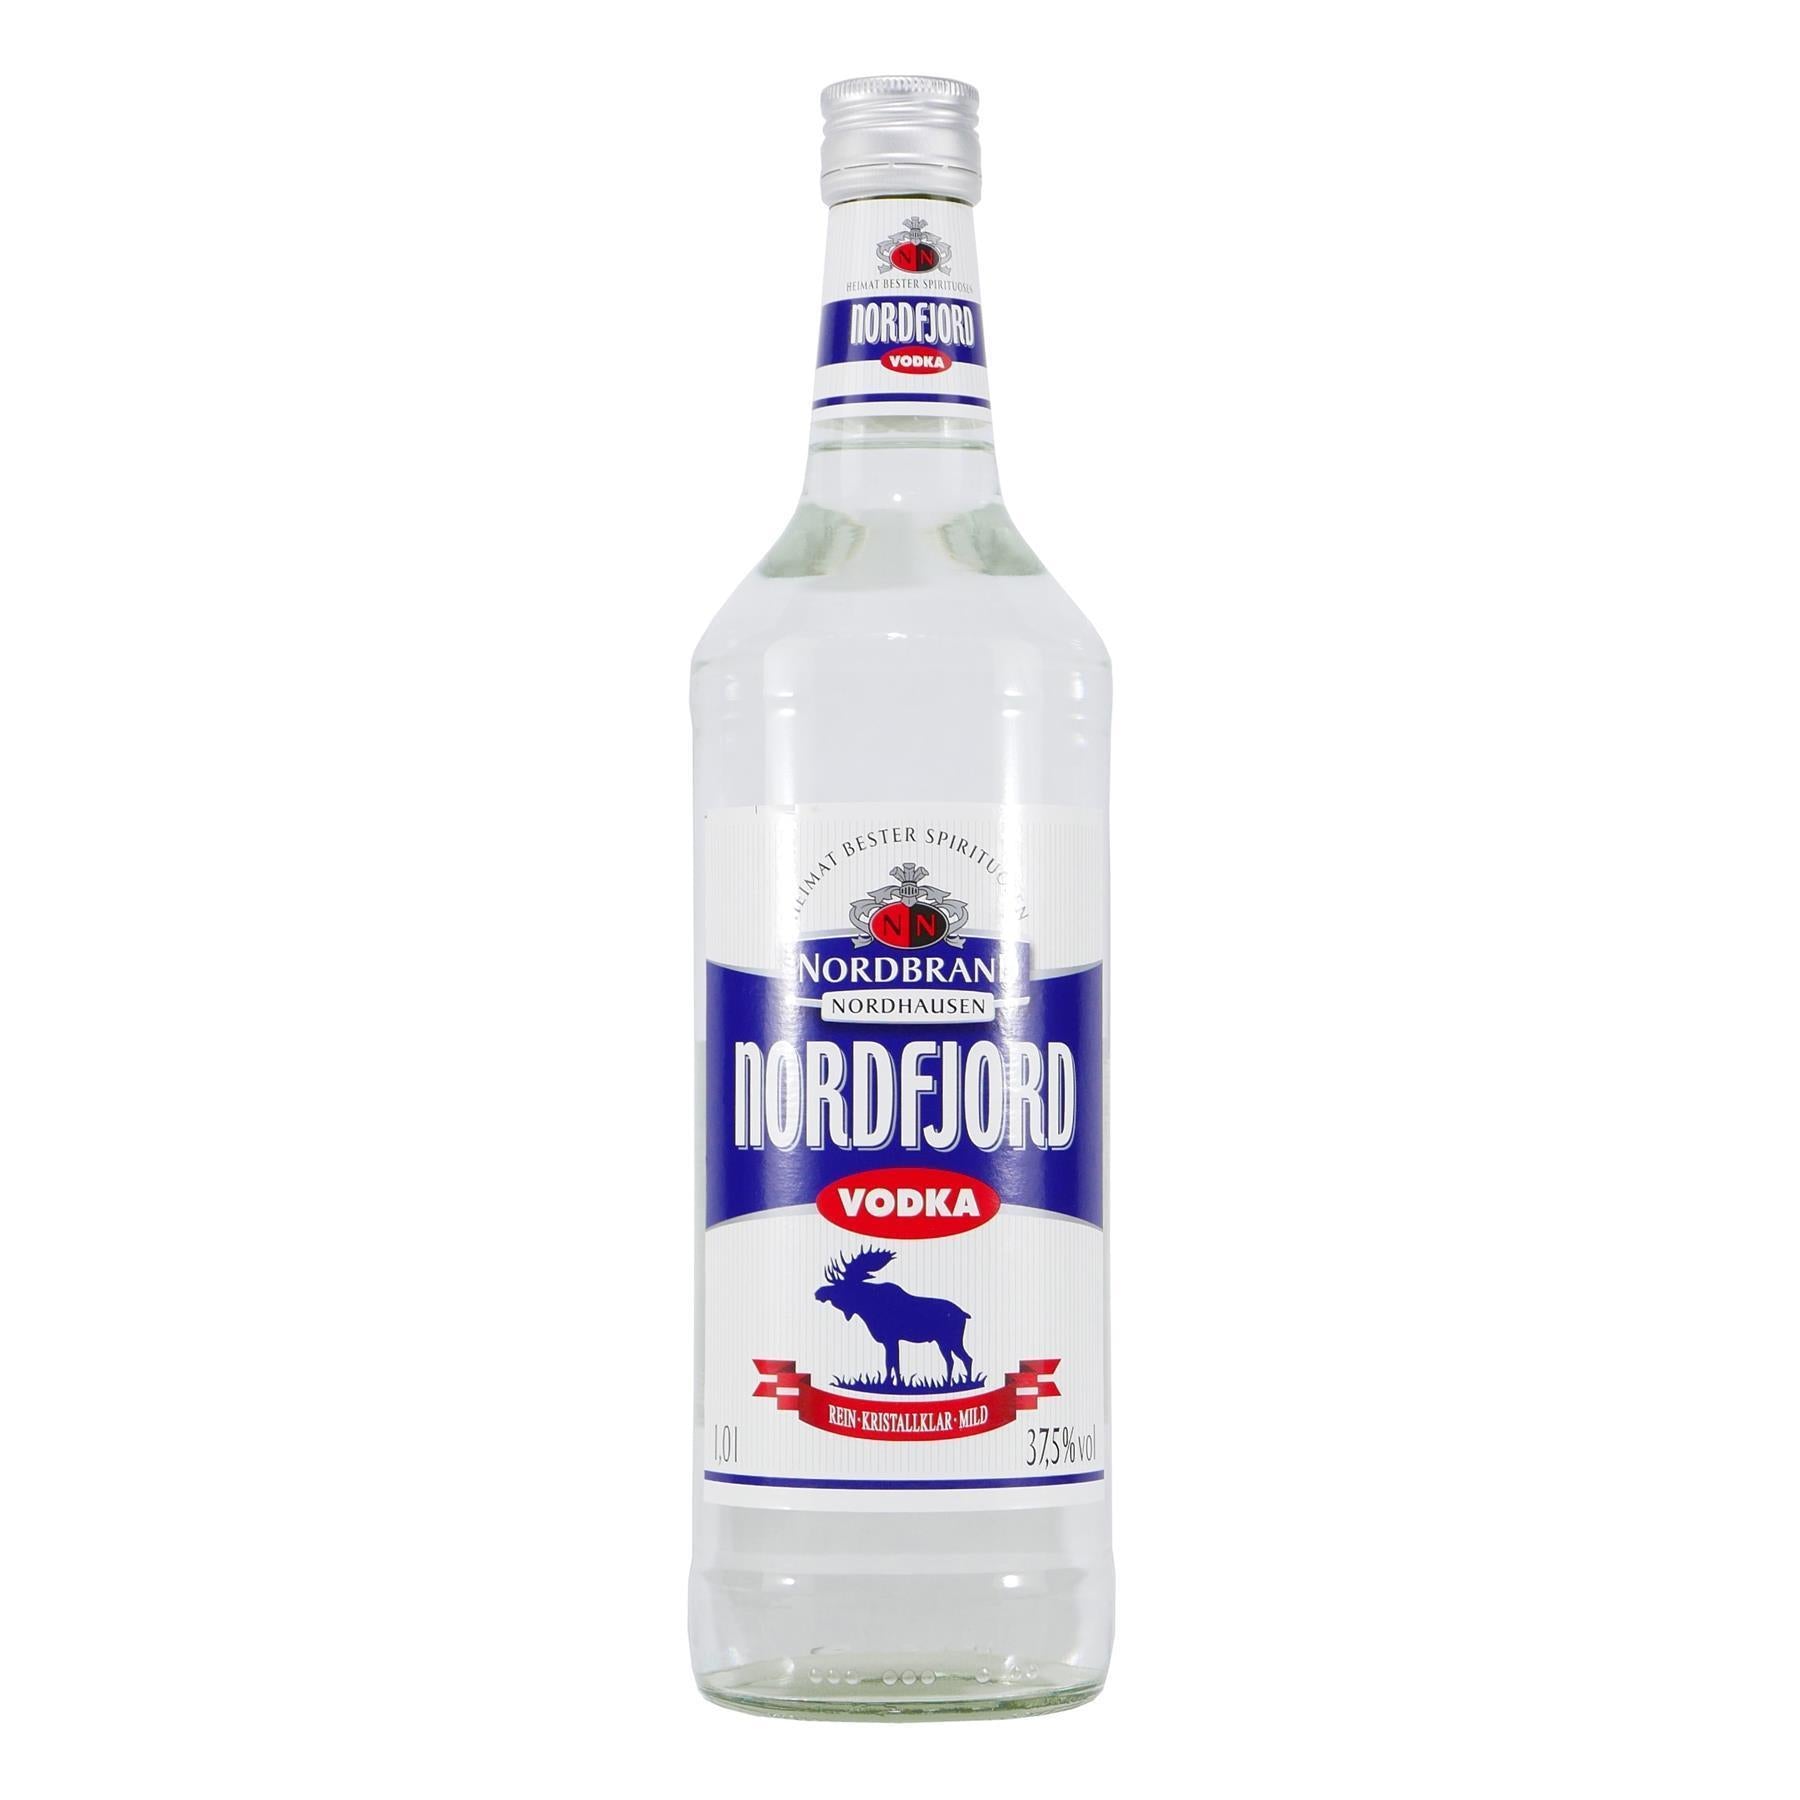 Nordbrand Nordfjord Vodka